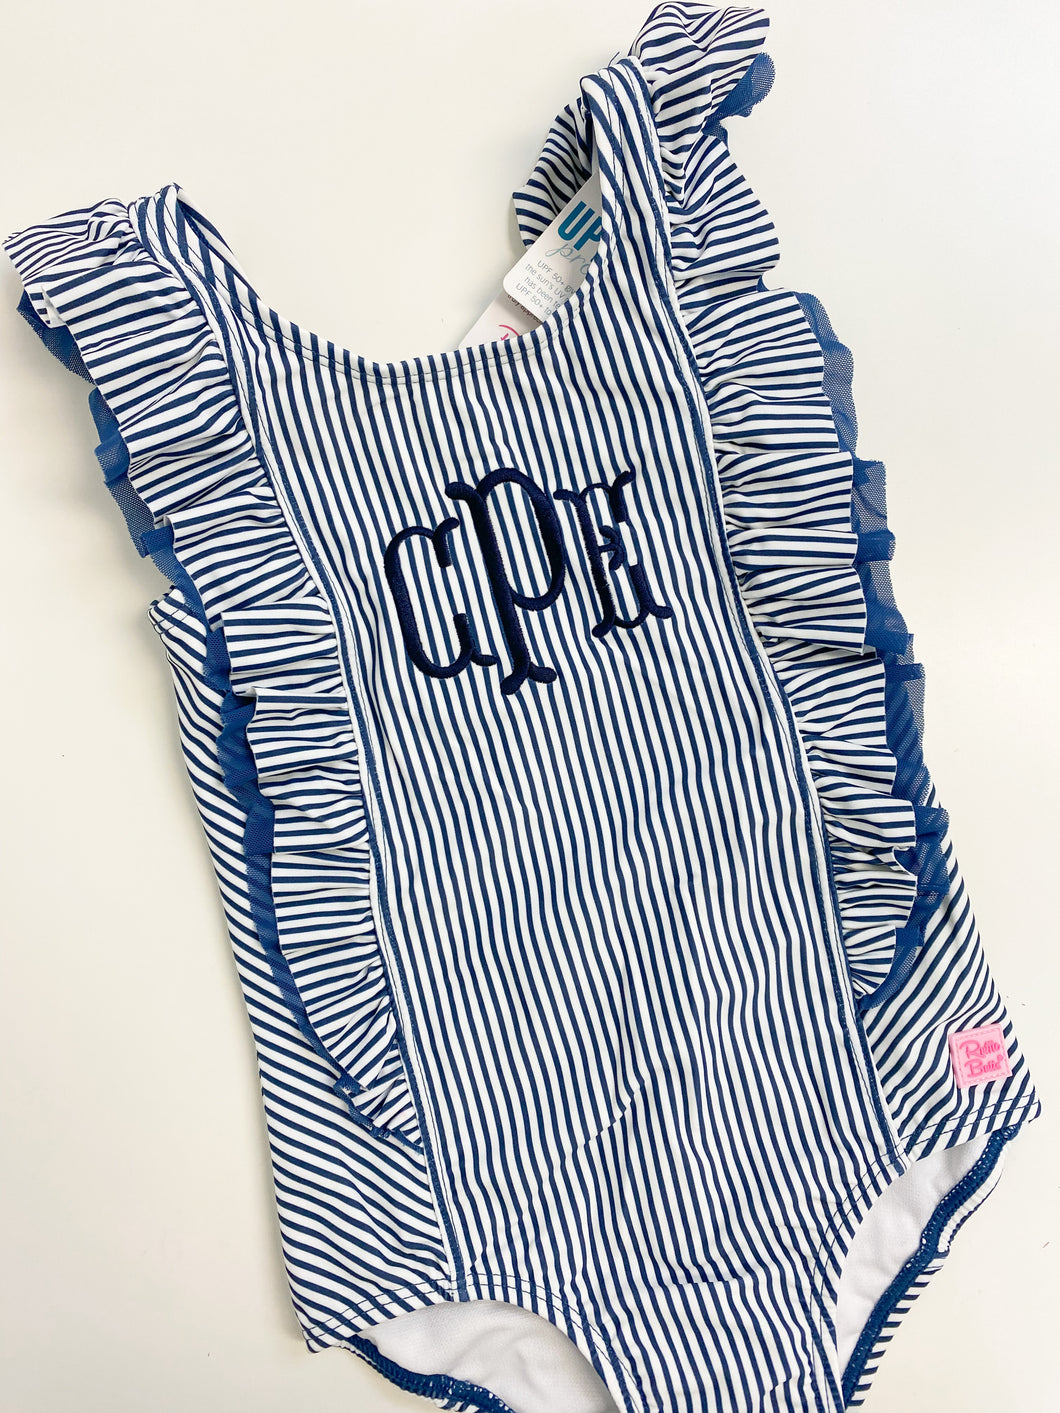 cPe ruffle 6T bathing suit- No Flaw